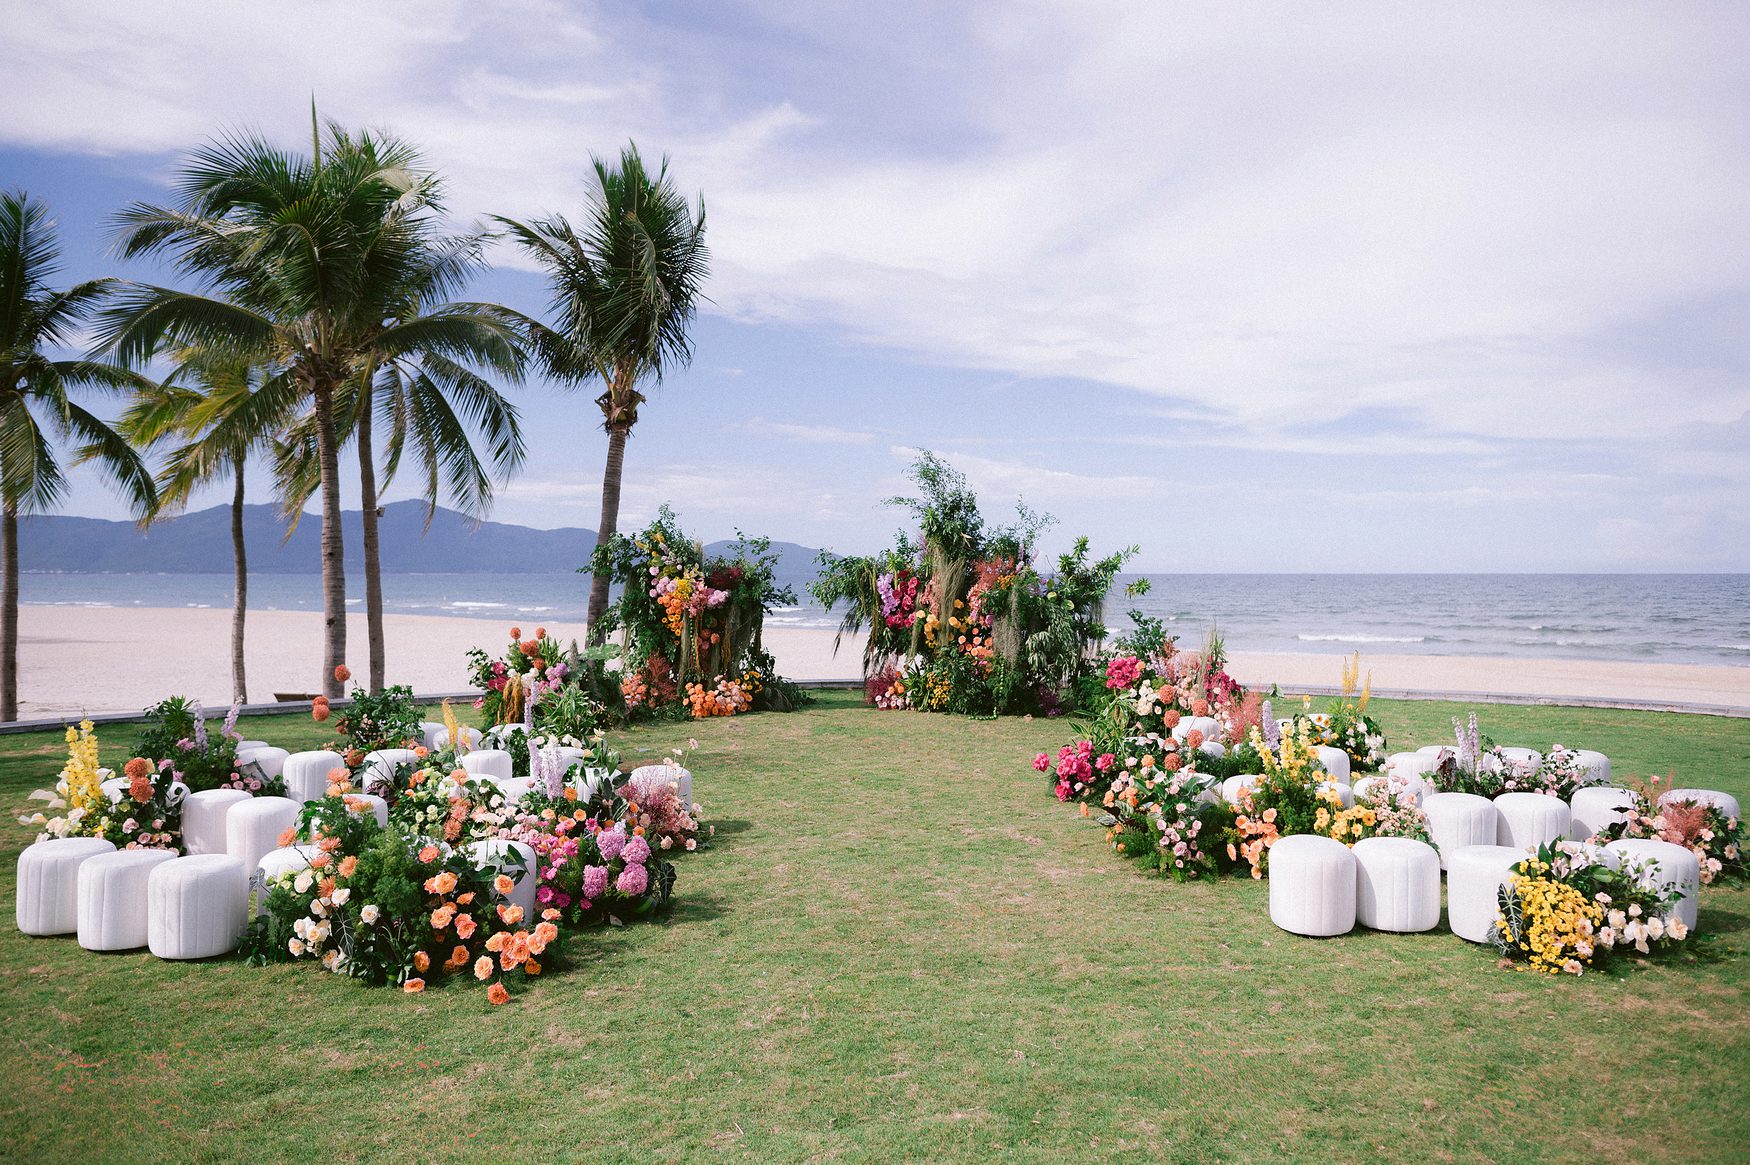 A vibrant destination wedding in Danang